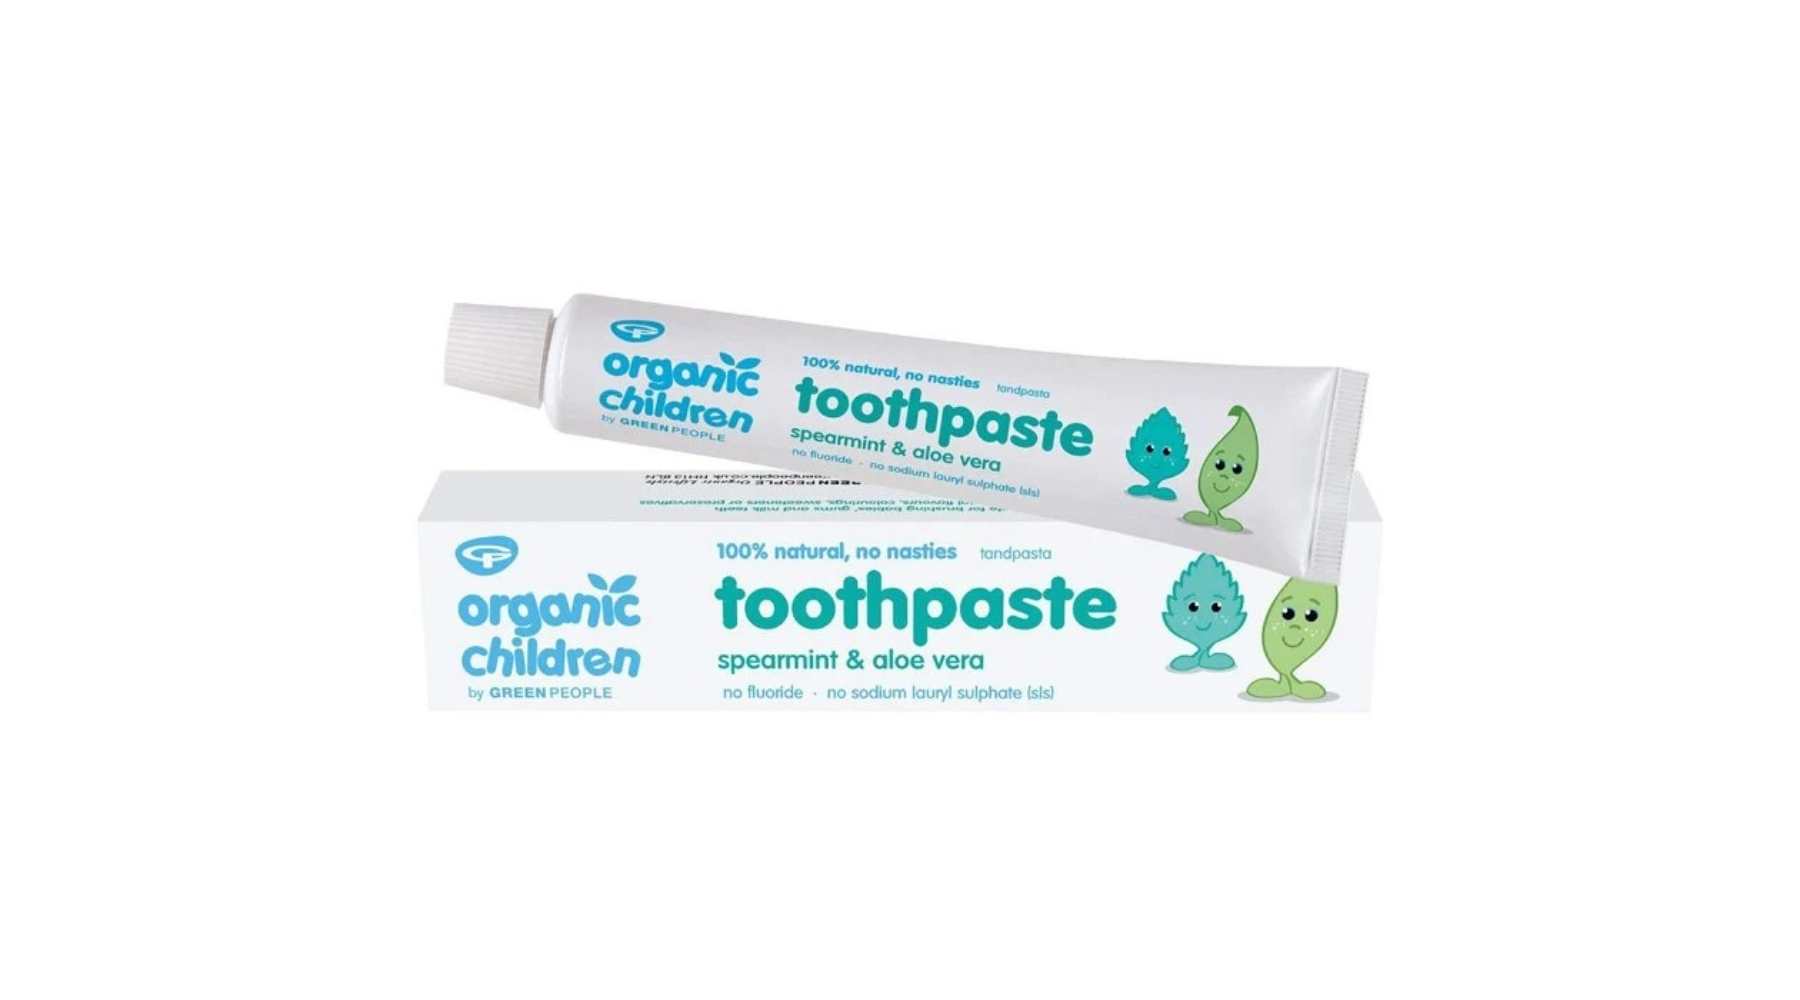 Green People - Organic Children Toothpaste